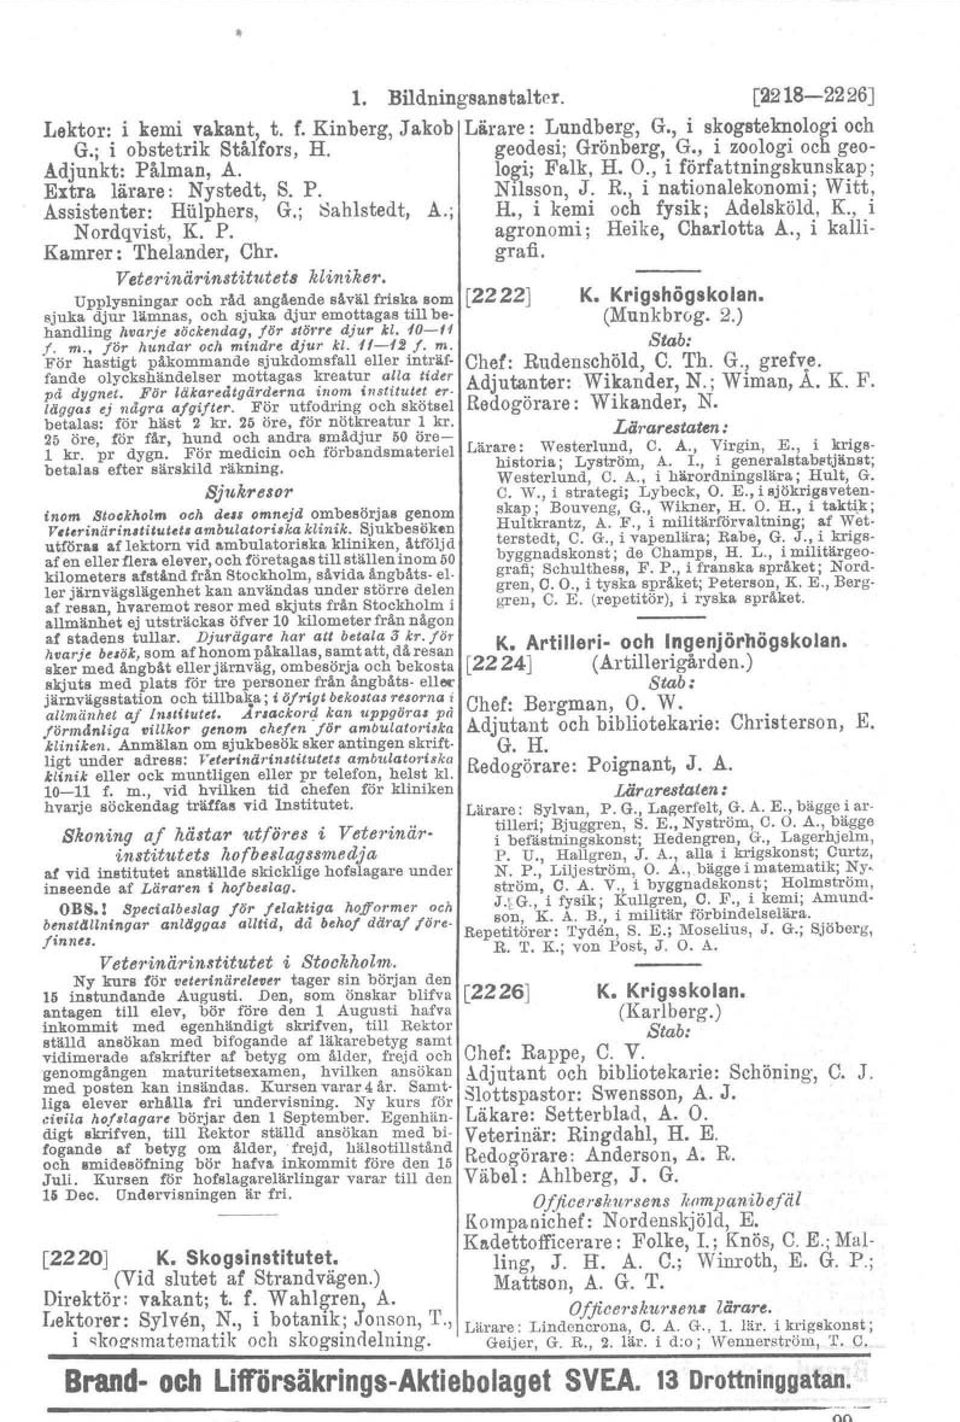 , i kemi och fysik; Adelsköld, K., i Nordqvist, K. P. agronomi; Heike, Charlotta A., i kalli- Kamrer : TheIander, Chr. grafi. Veterinärinstitutet8 kliniker.